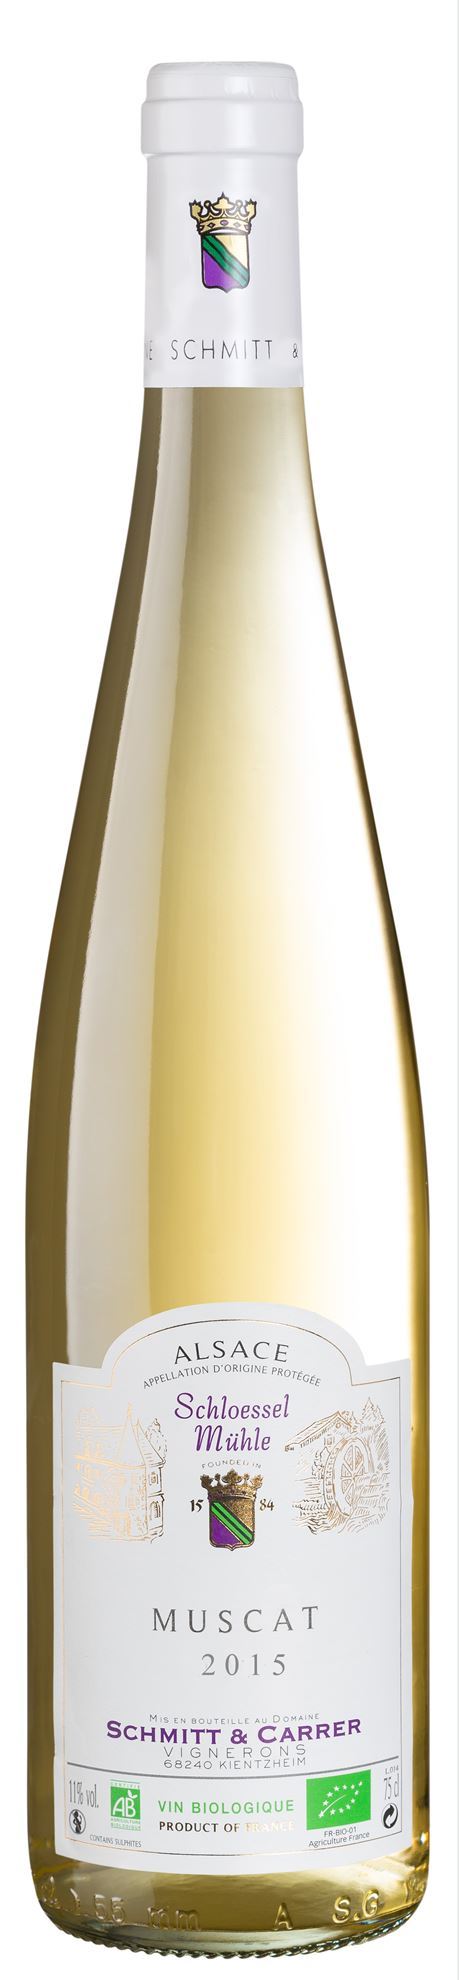 MUSCAT "Schloessel Mühle" Premier Vin d'Alsace 2015 Schmitt & Carrer BIO